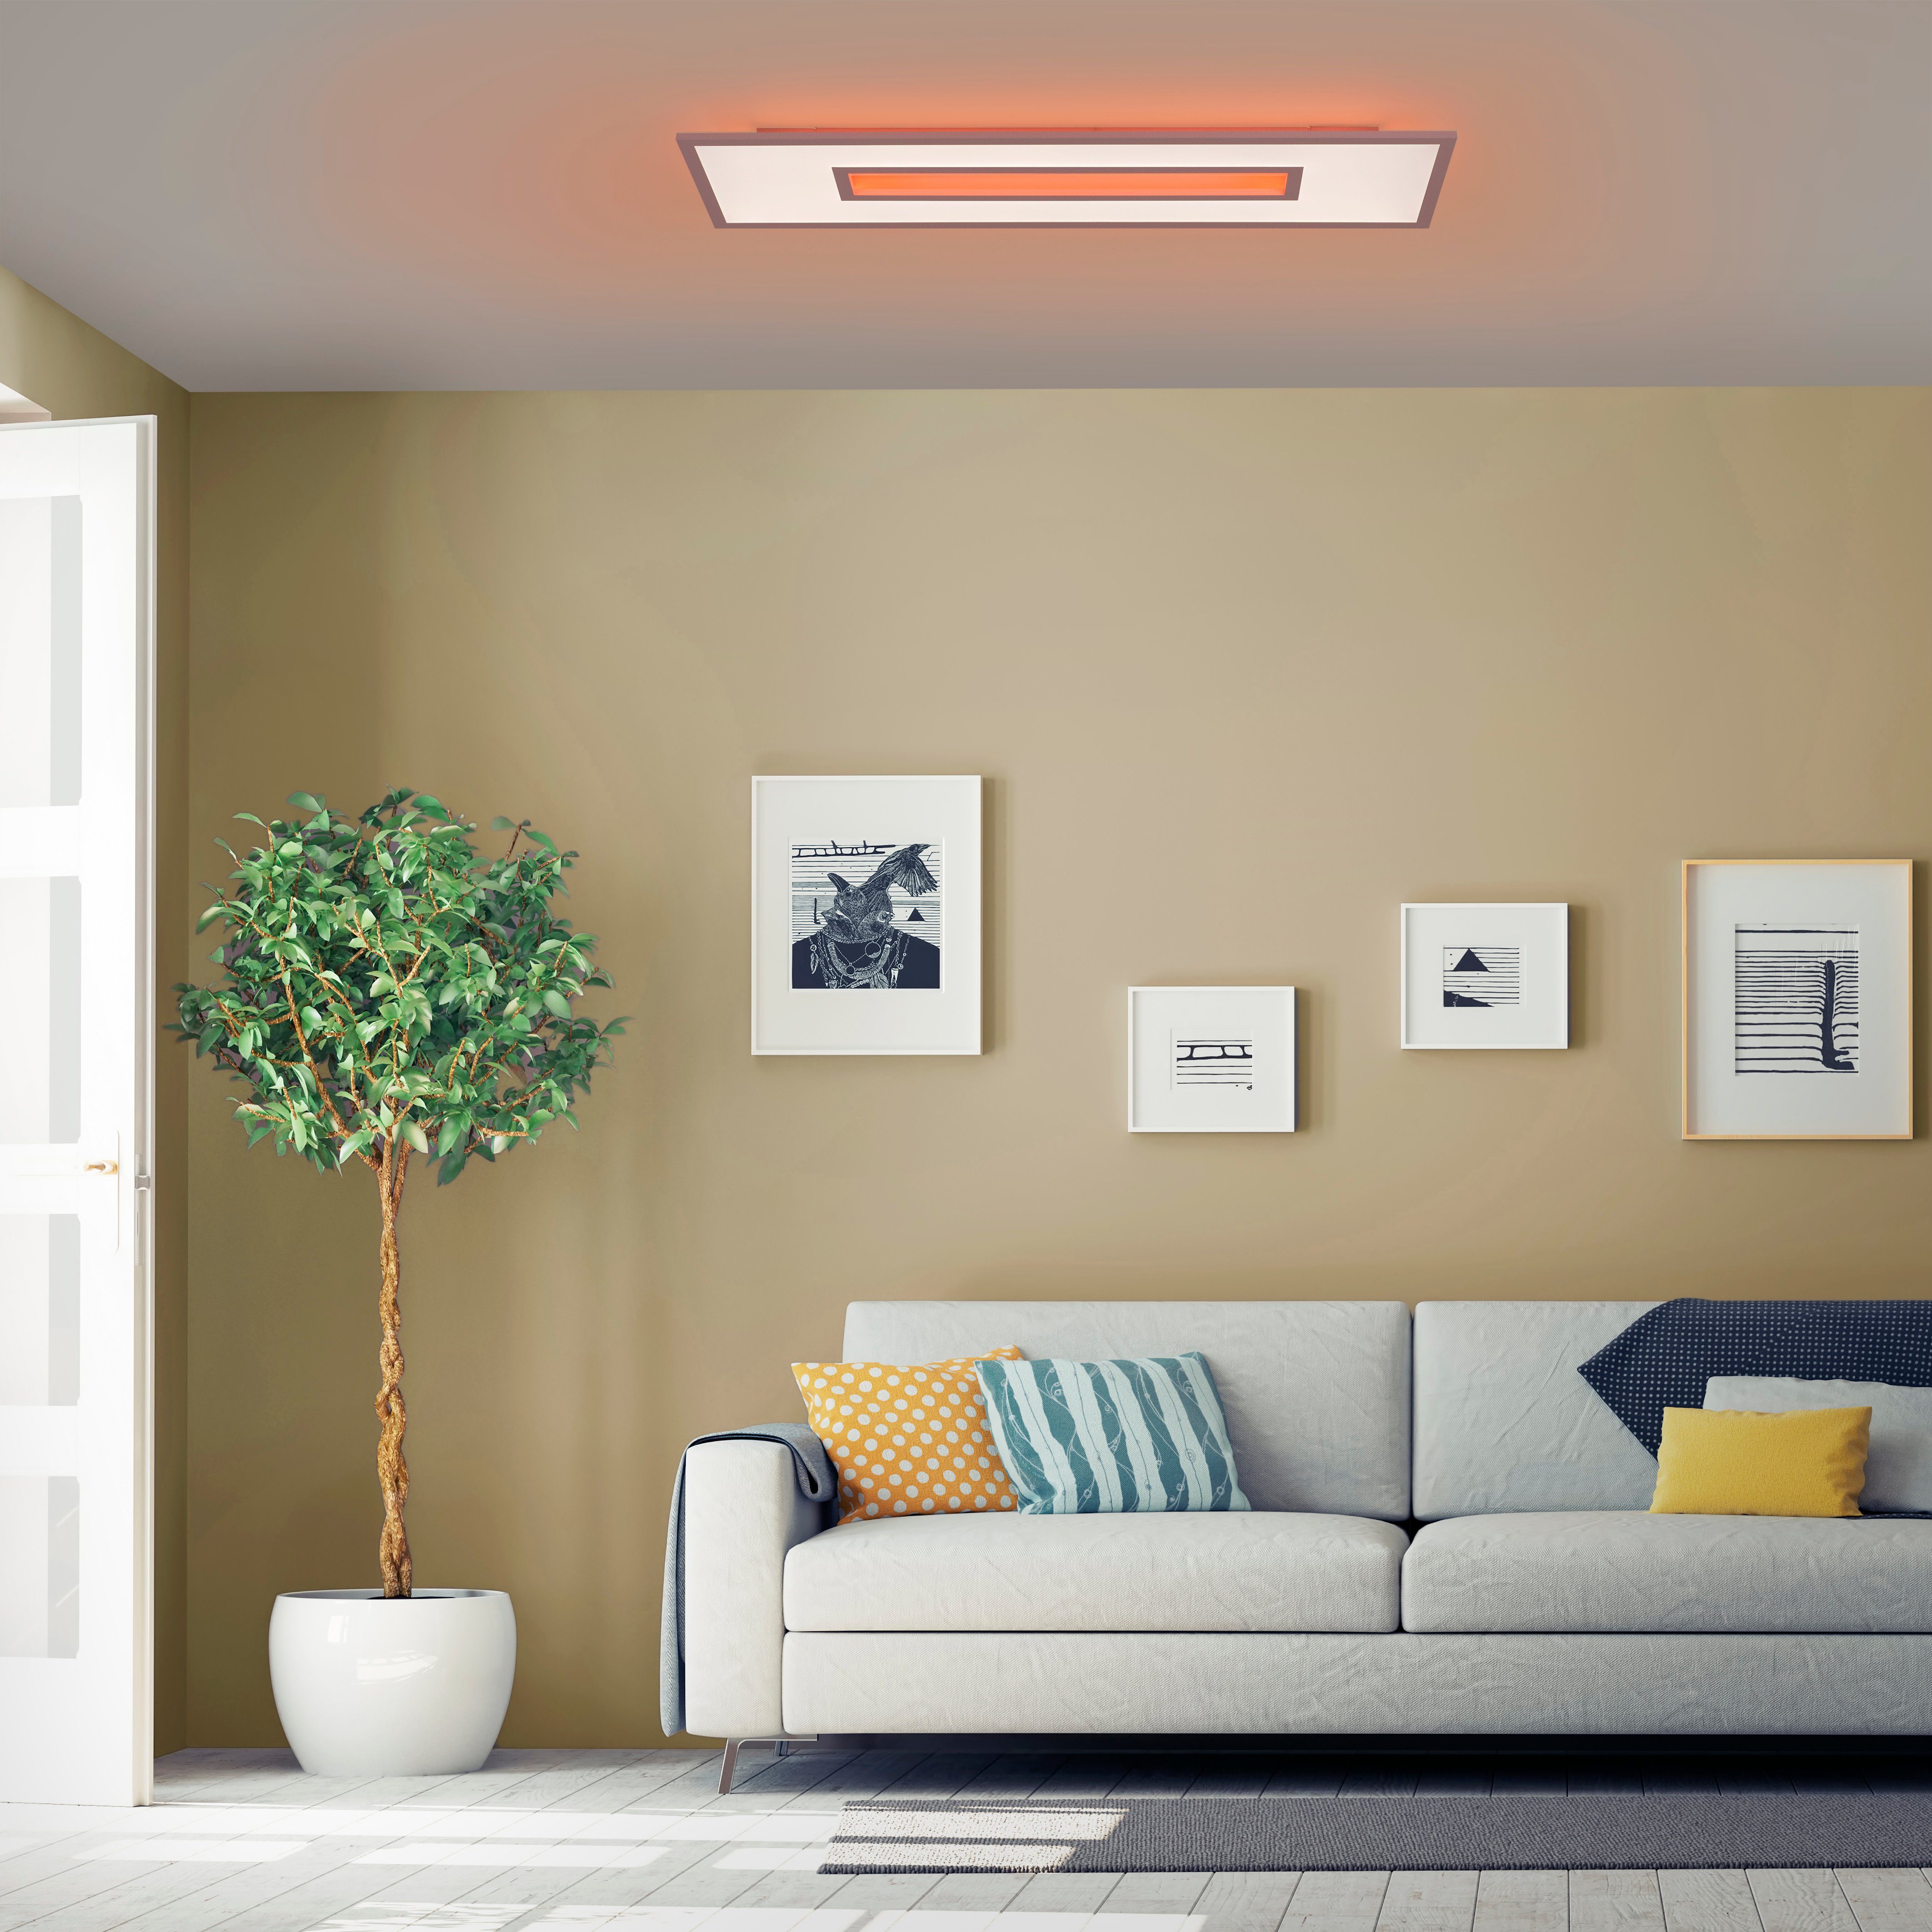 Leuchten Direkt fest Dimmfunktion, Deckenleuchte über kaltweiß, integriert, - RECESS, LED dimmbar warmweiß Fernbedienung LED